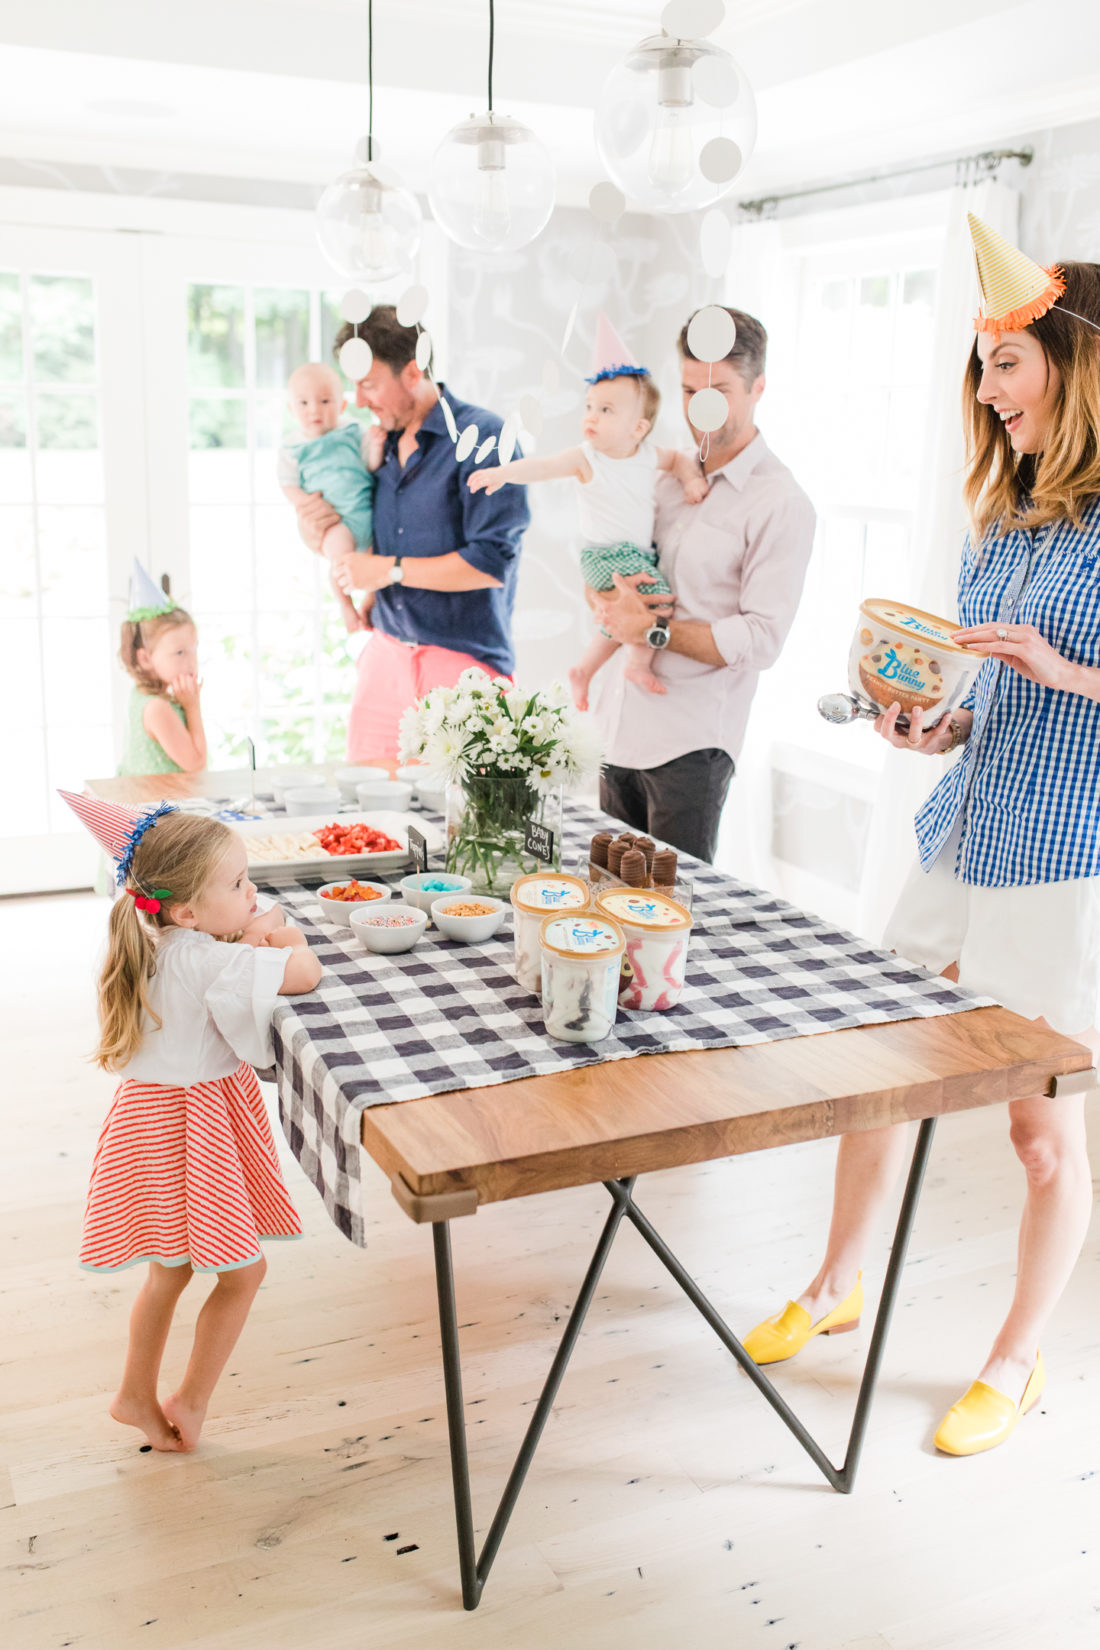 Eva Amurri Martino, her husband, children, and friends gather to celebrate a festive ice cream social with blue bunny ice cream